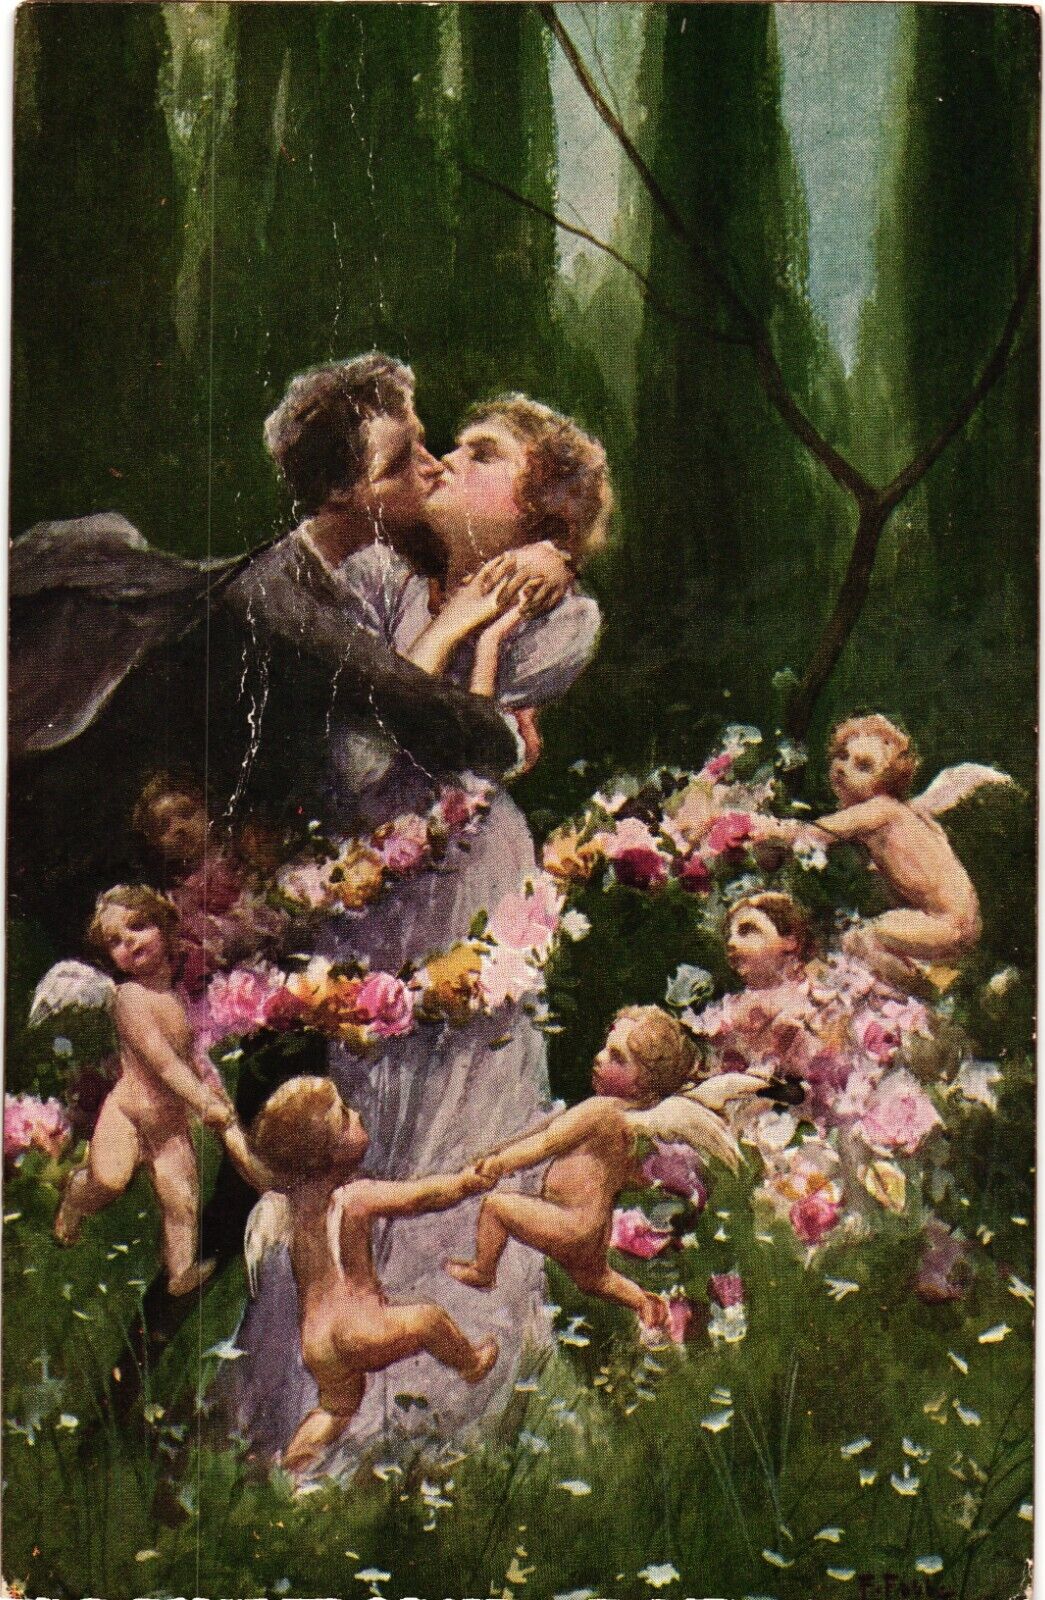 Sborgi Italy Romance Couple Surrounded by Cherubs Roses Vintage Postcard